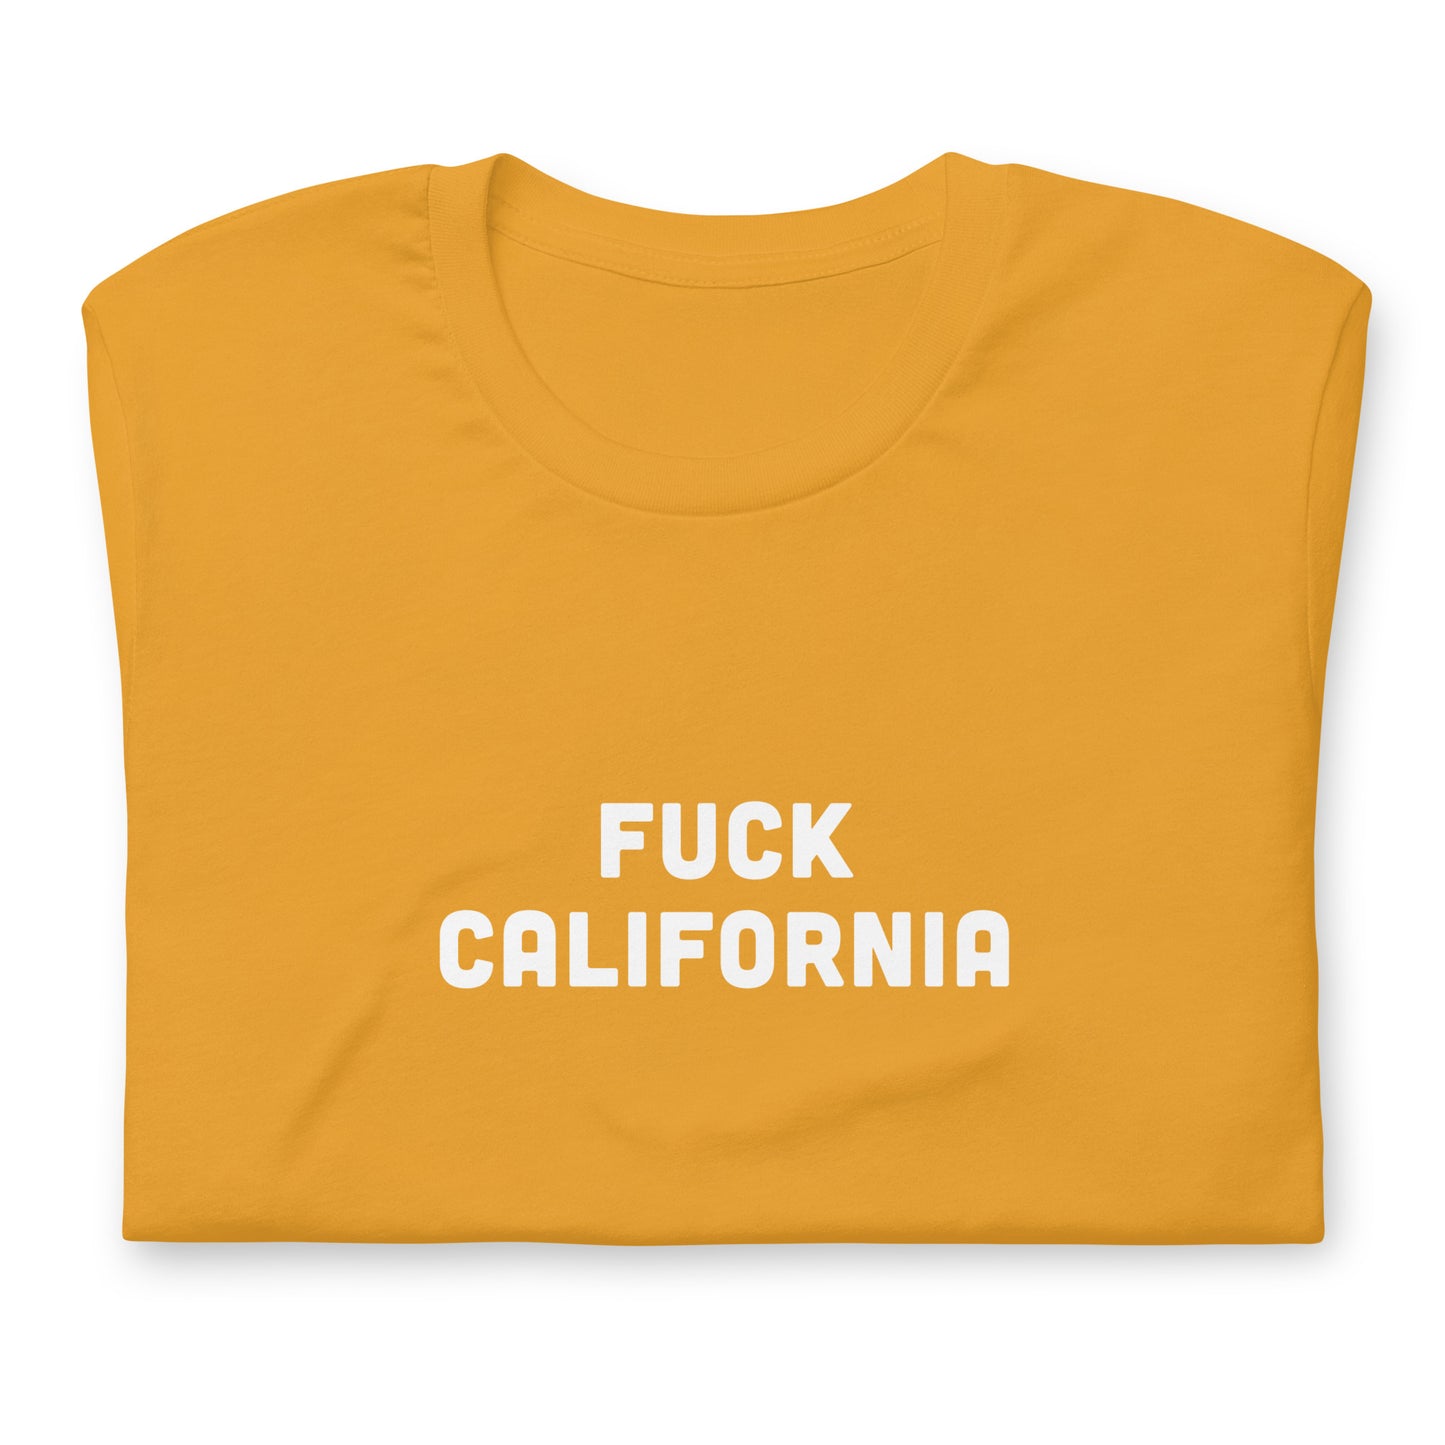 Fuck California T-Shirt Size S Color Black